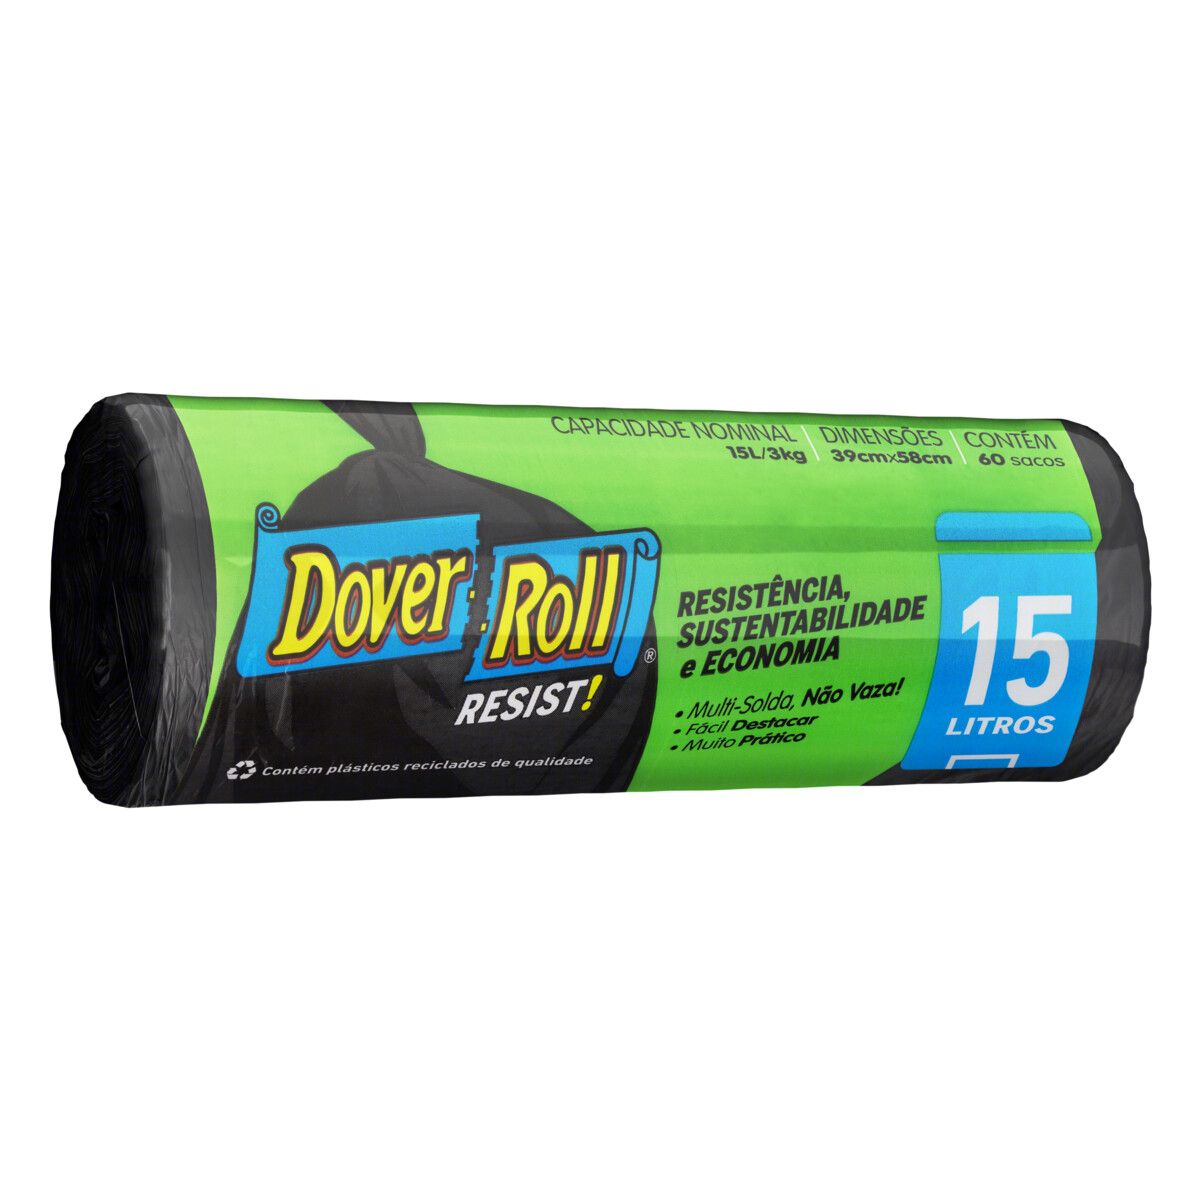 Saco para Lixo Dover Roll 15L Resist 60 Unidades image number 3